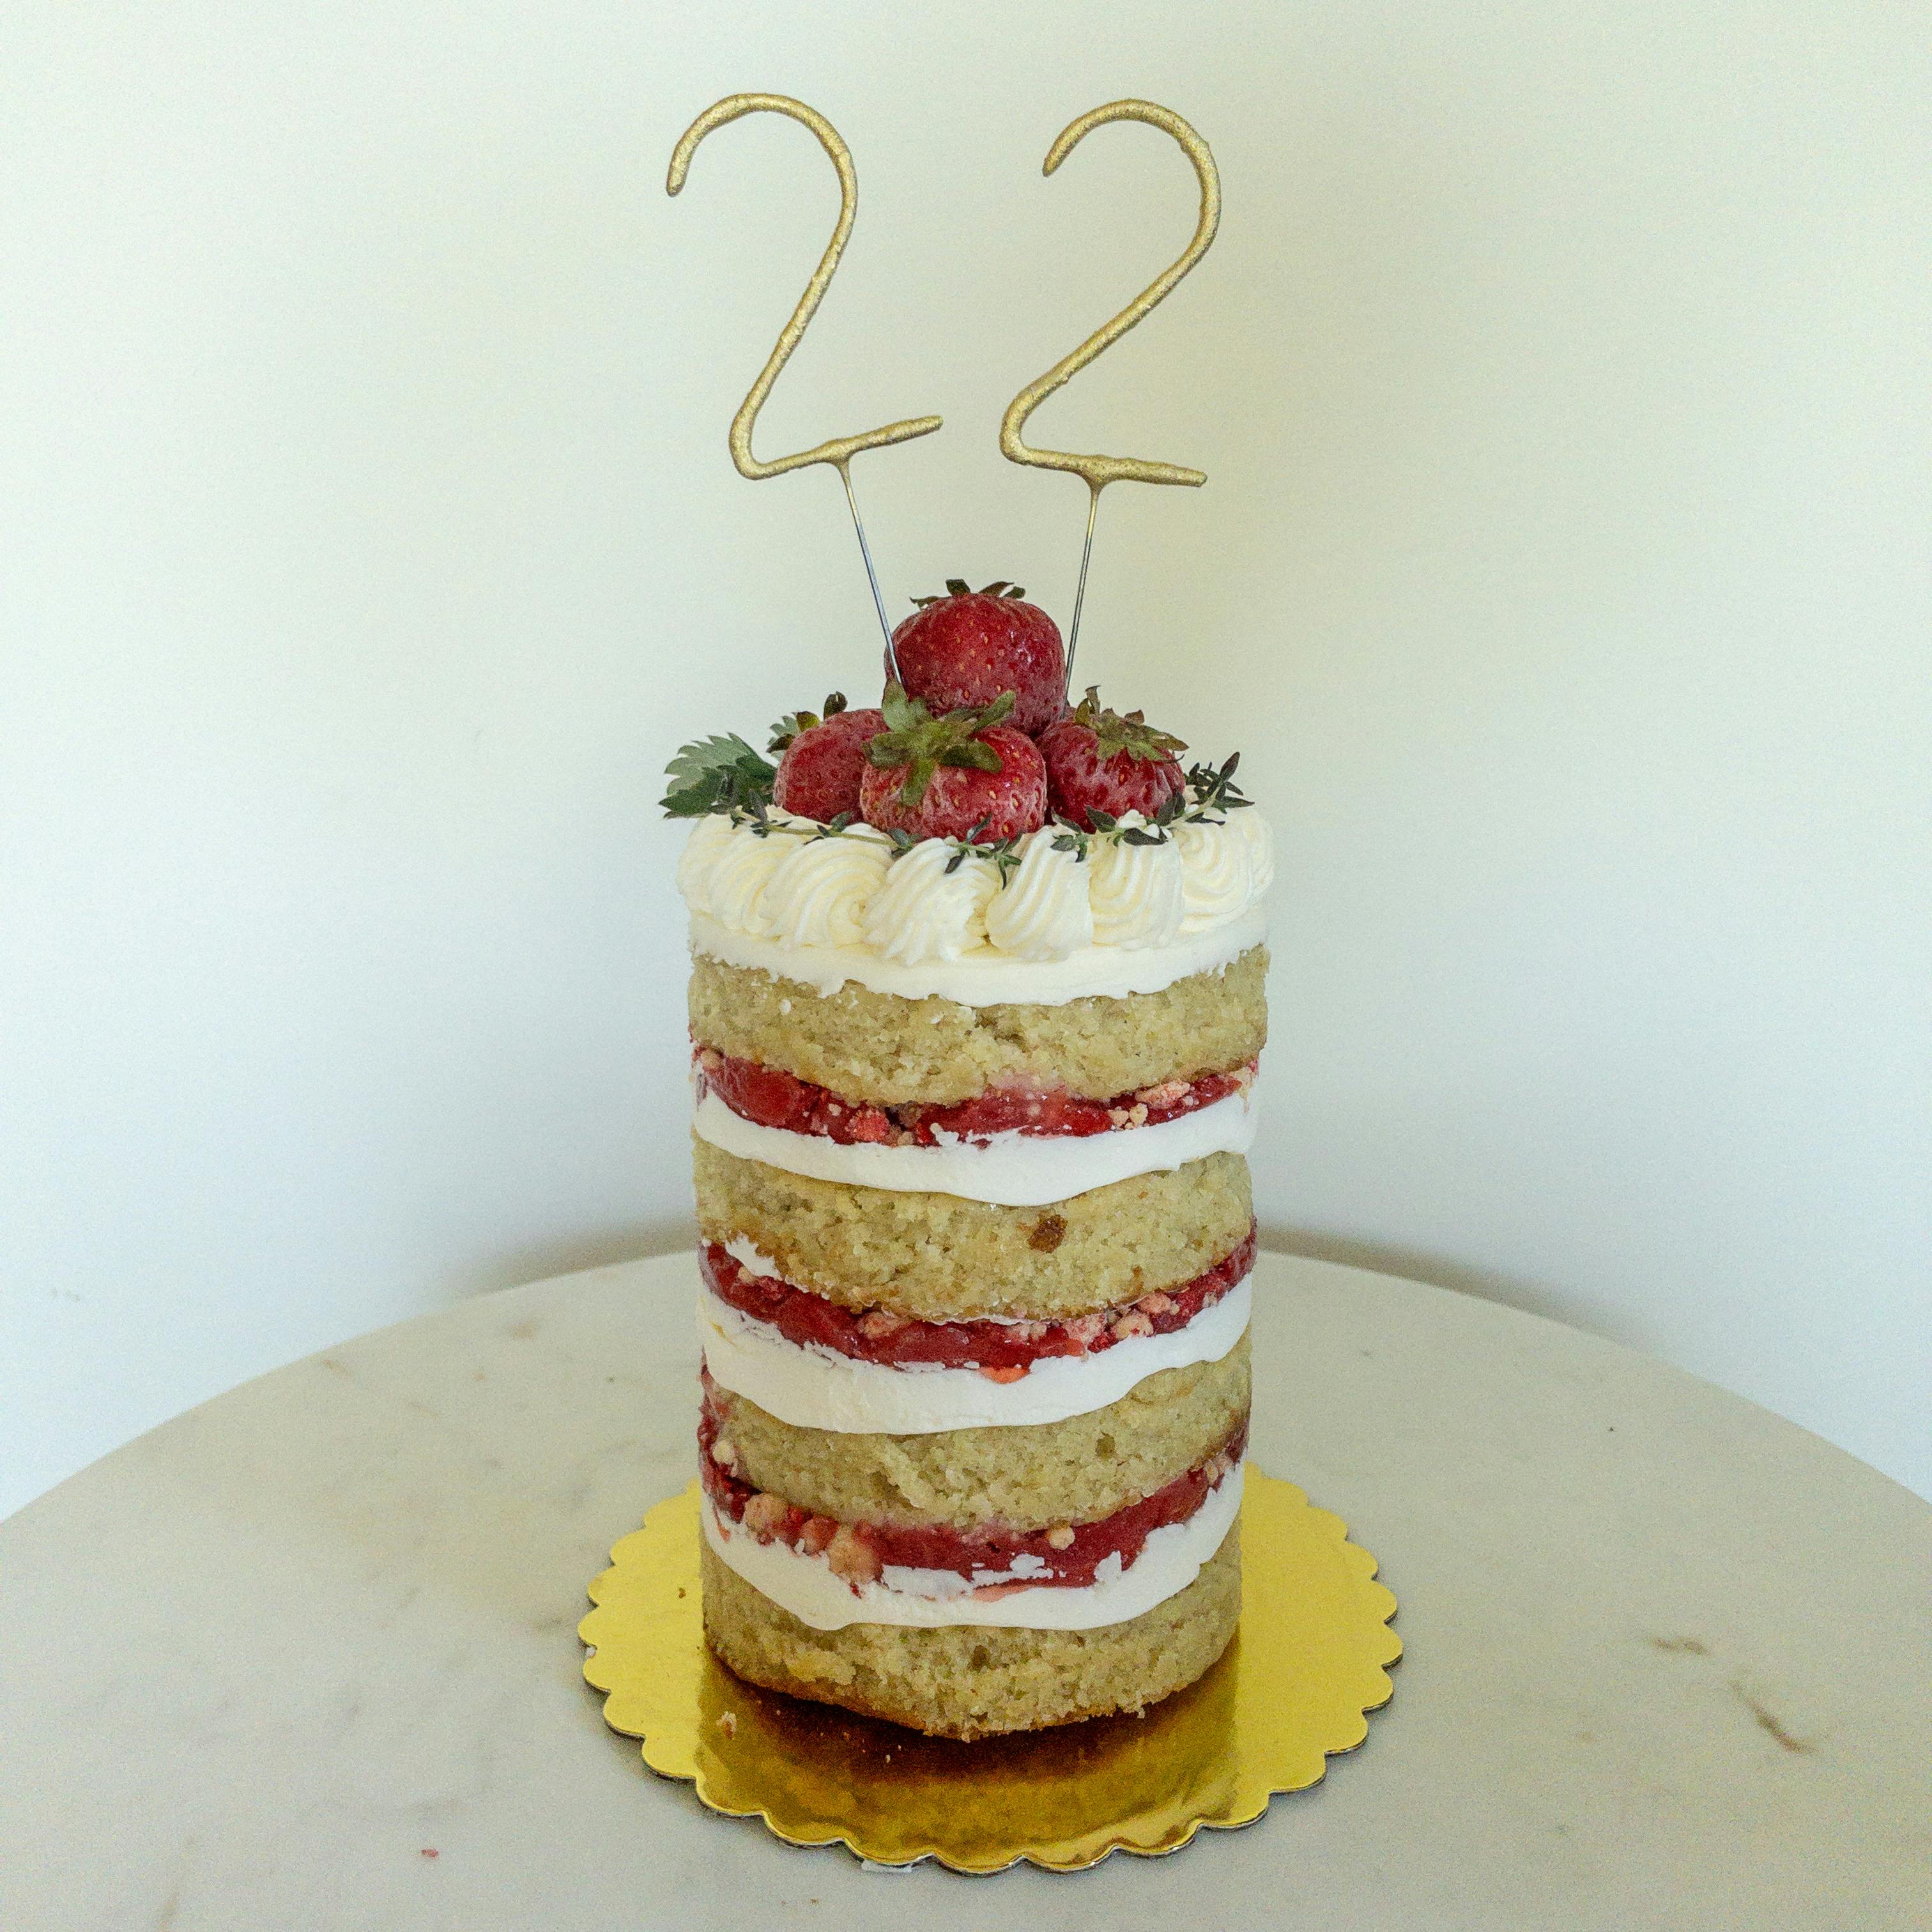 4” layer cake